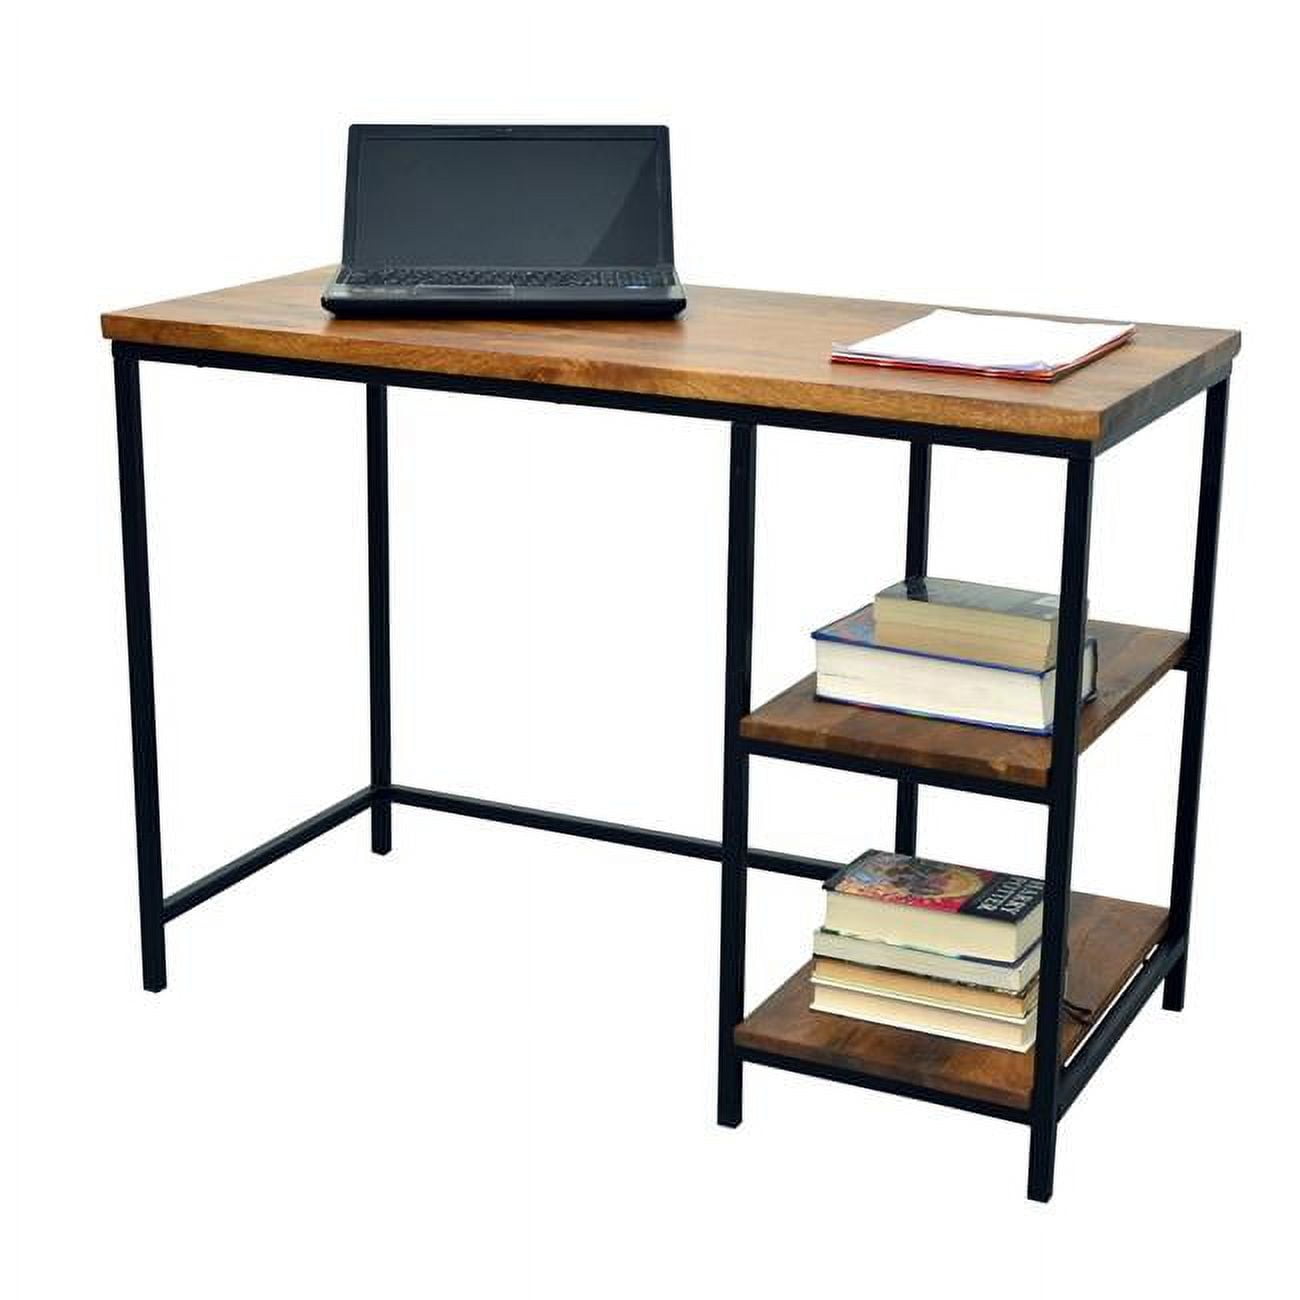 Cf4220chetbk Brayden Chestnut Desk With Shelves - 20 X 30 X 42 In.